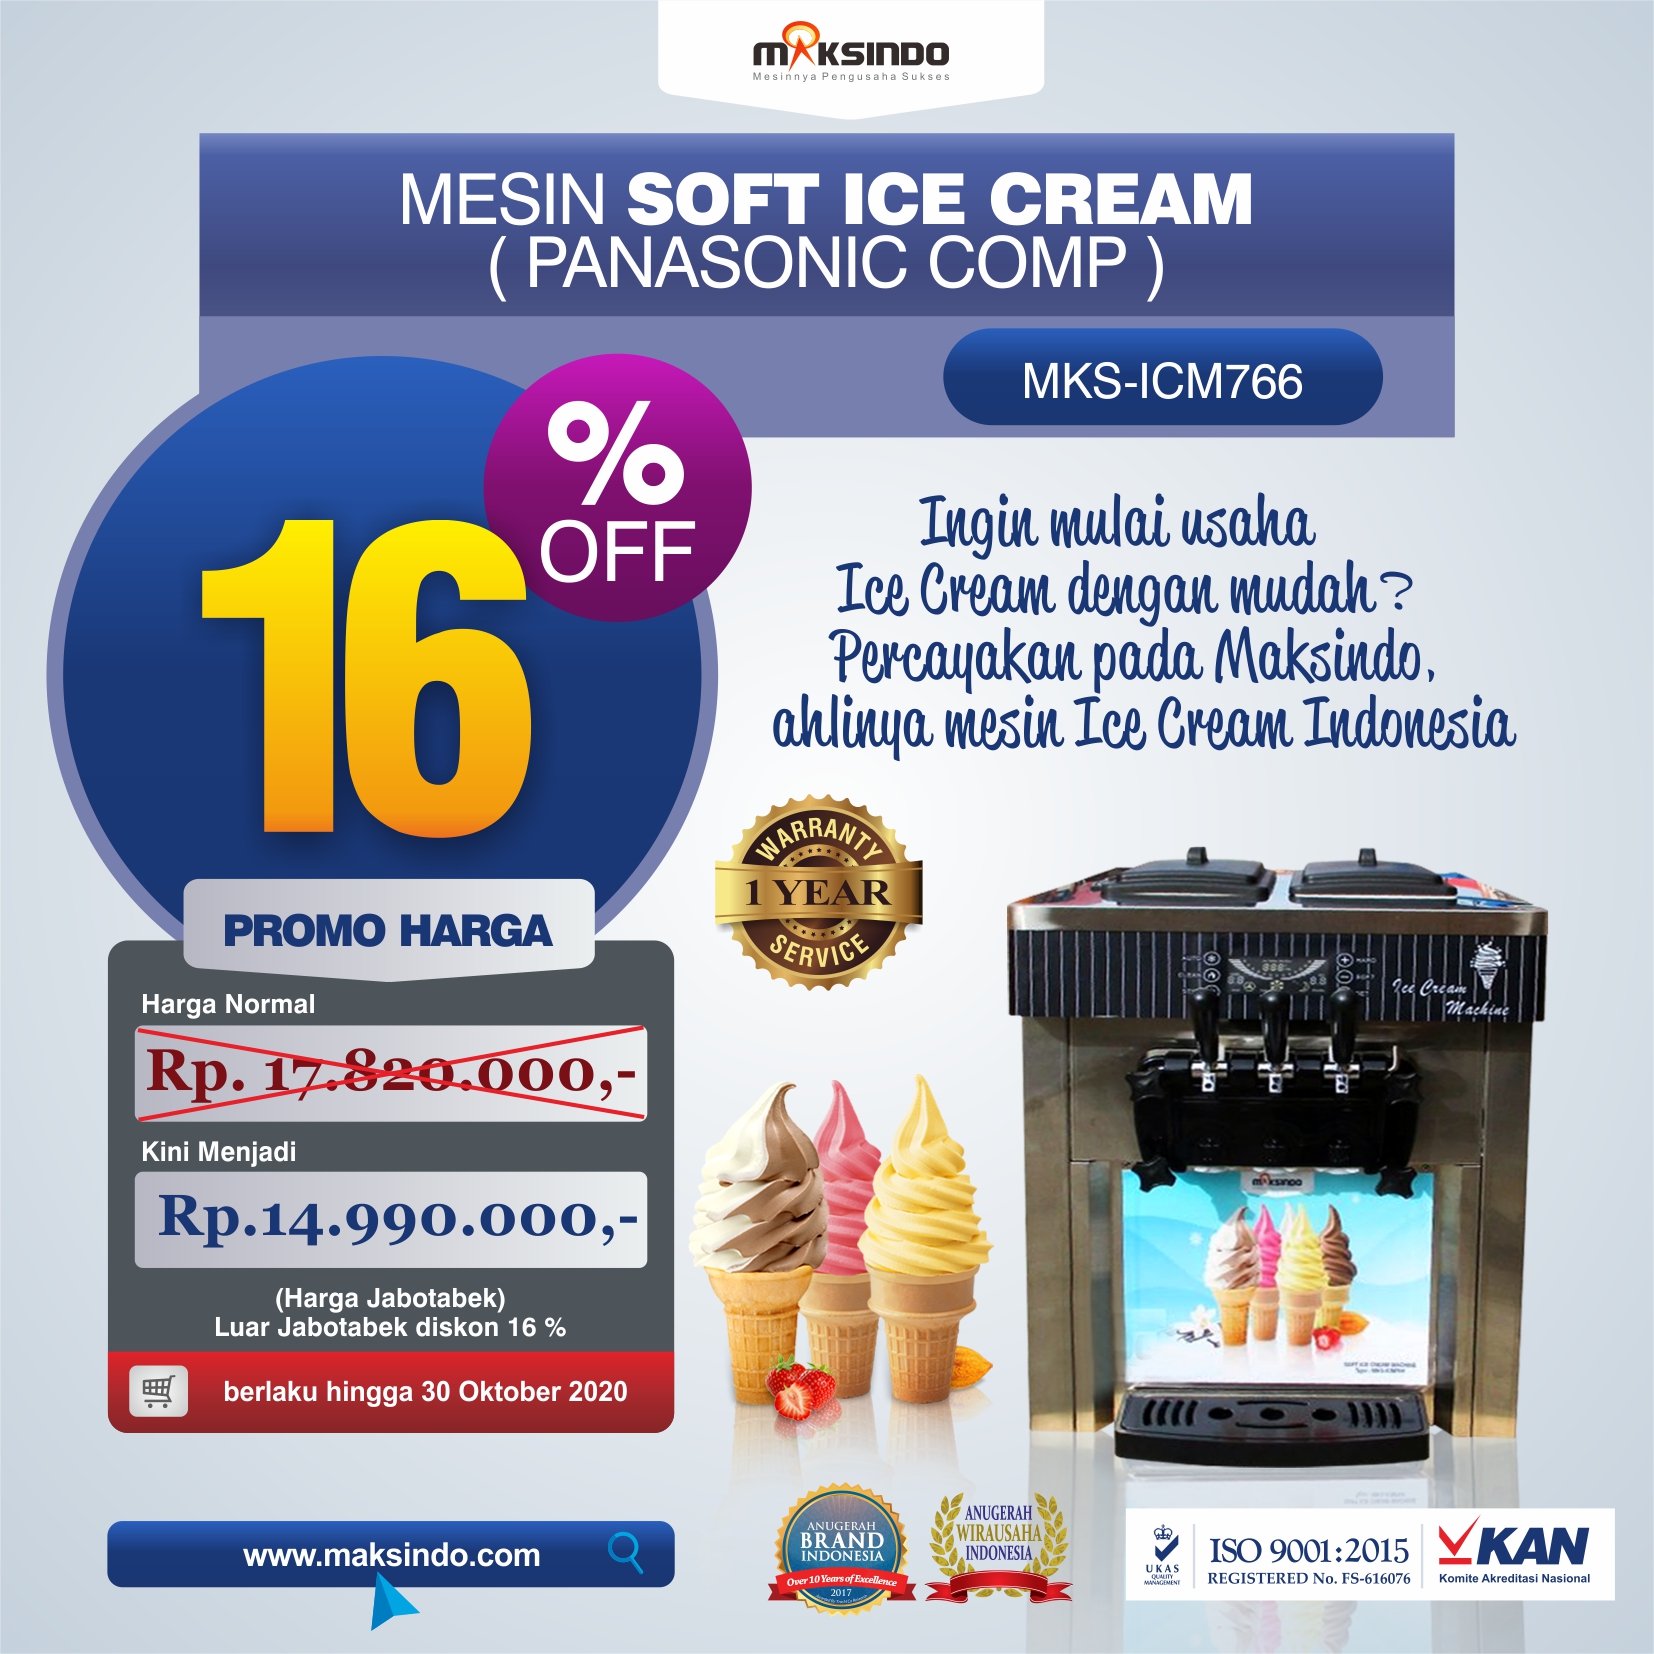 Jual Mesin Soft Ice Cream ICM766 (Panasonic Compressor) di Jakarta